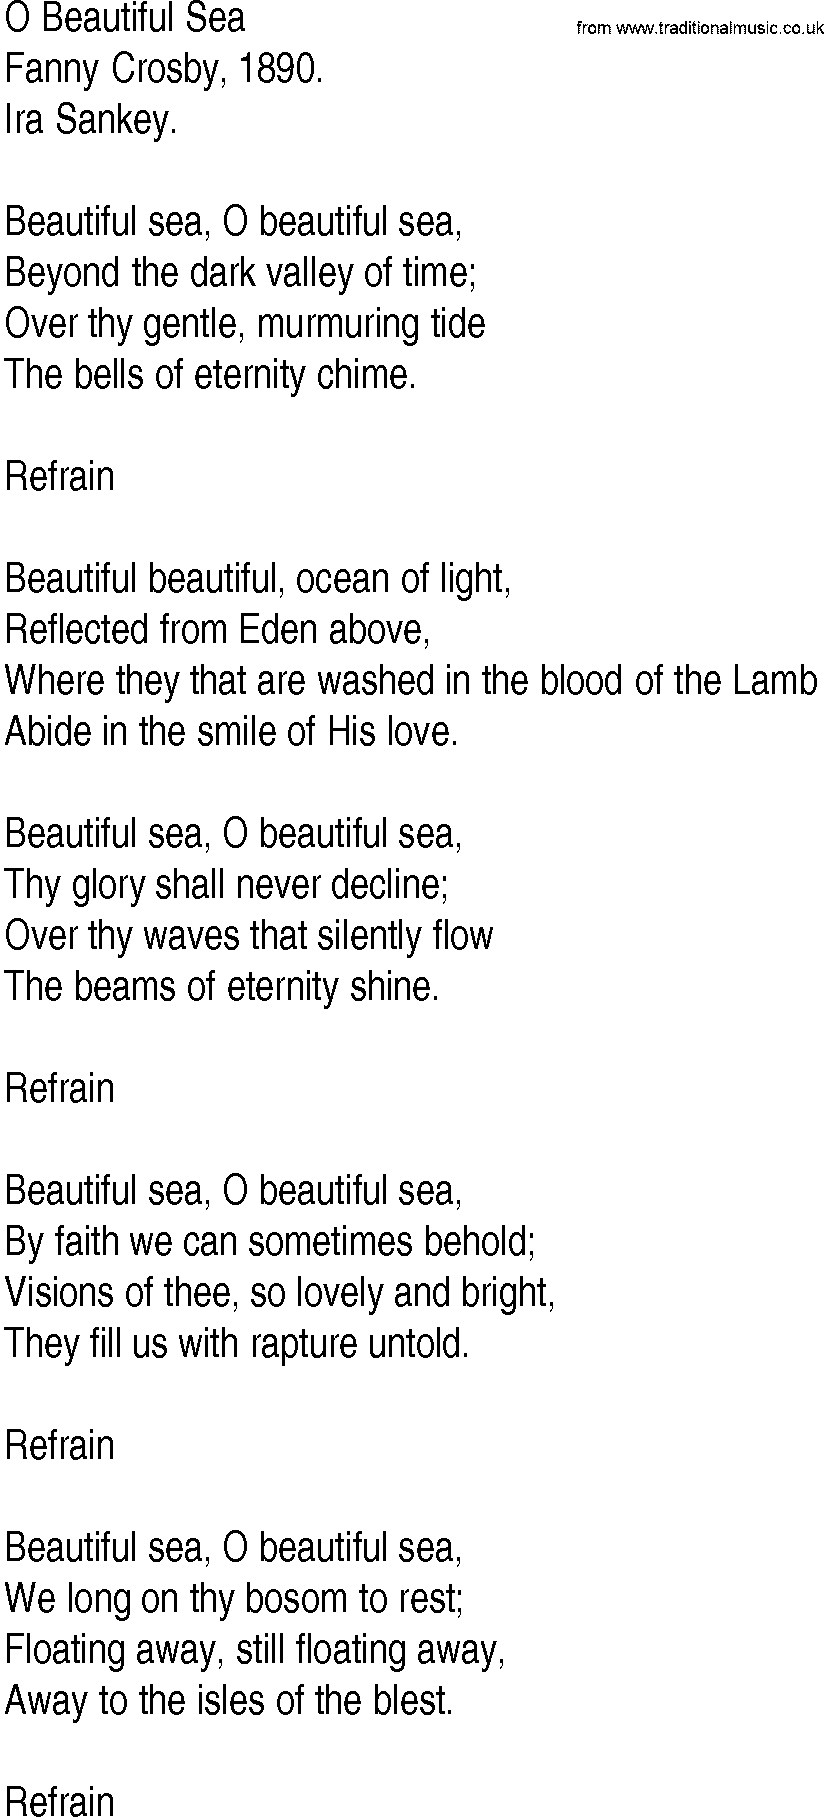 Hymn and Gospel Song: O Beautiful Sea by Fanny Crosby lyrics